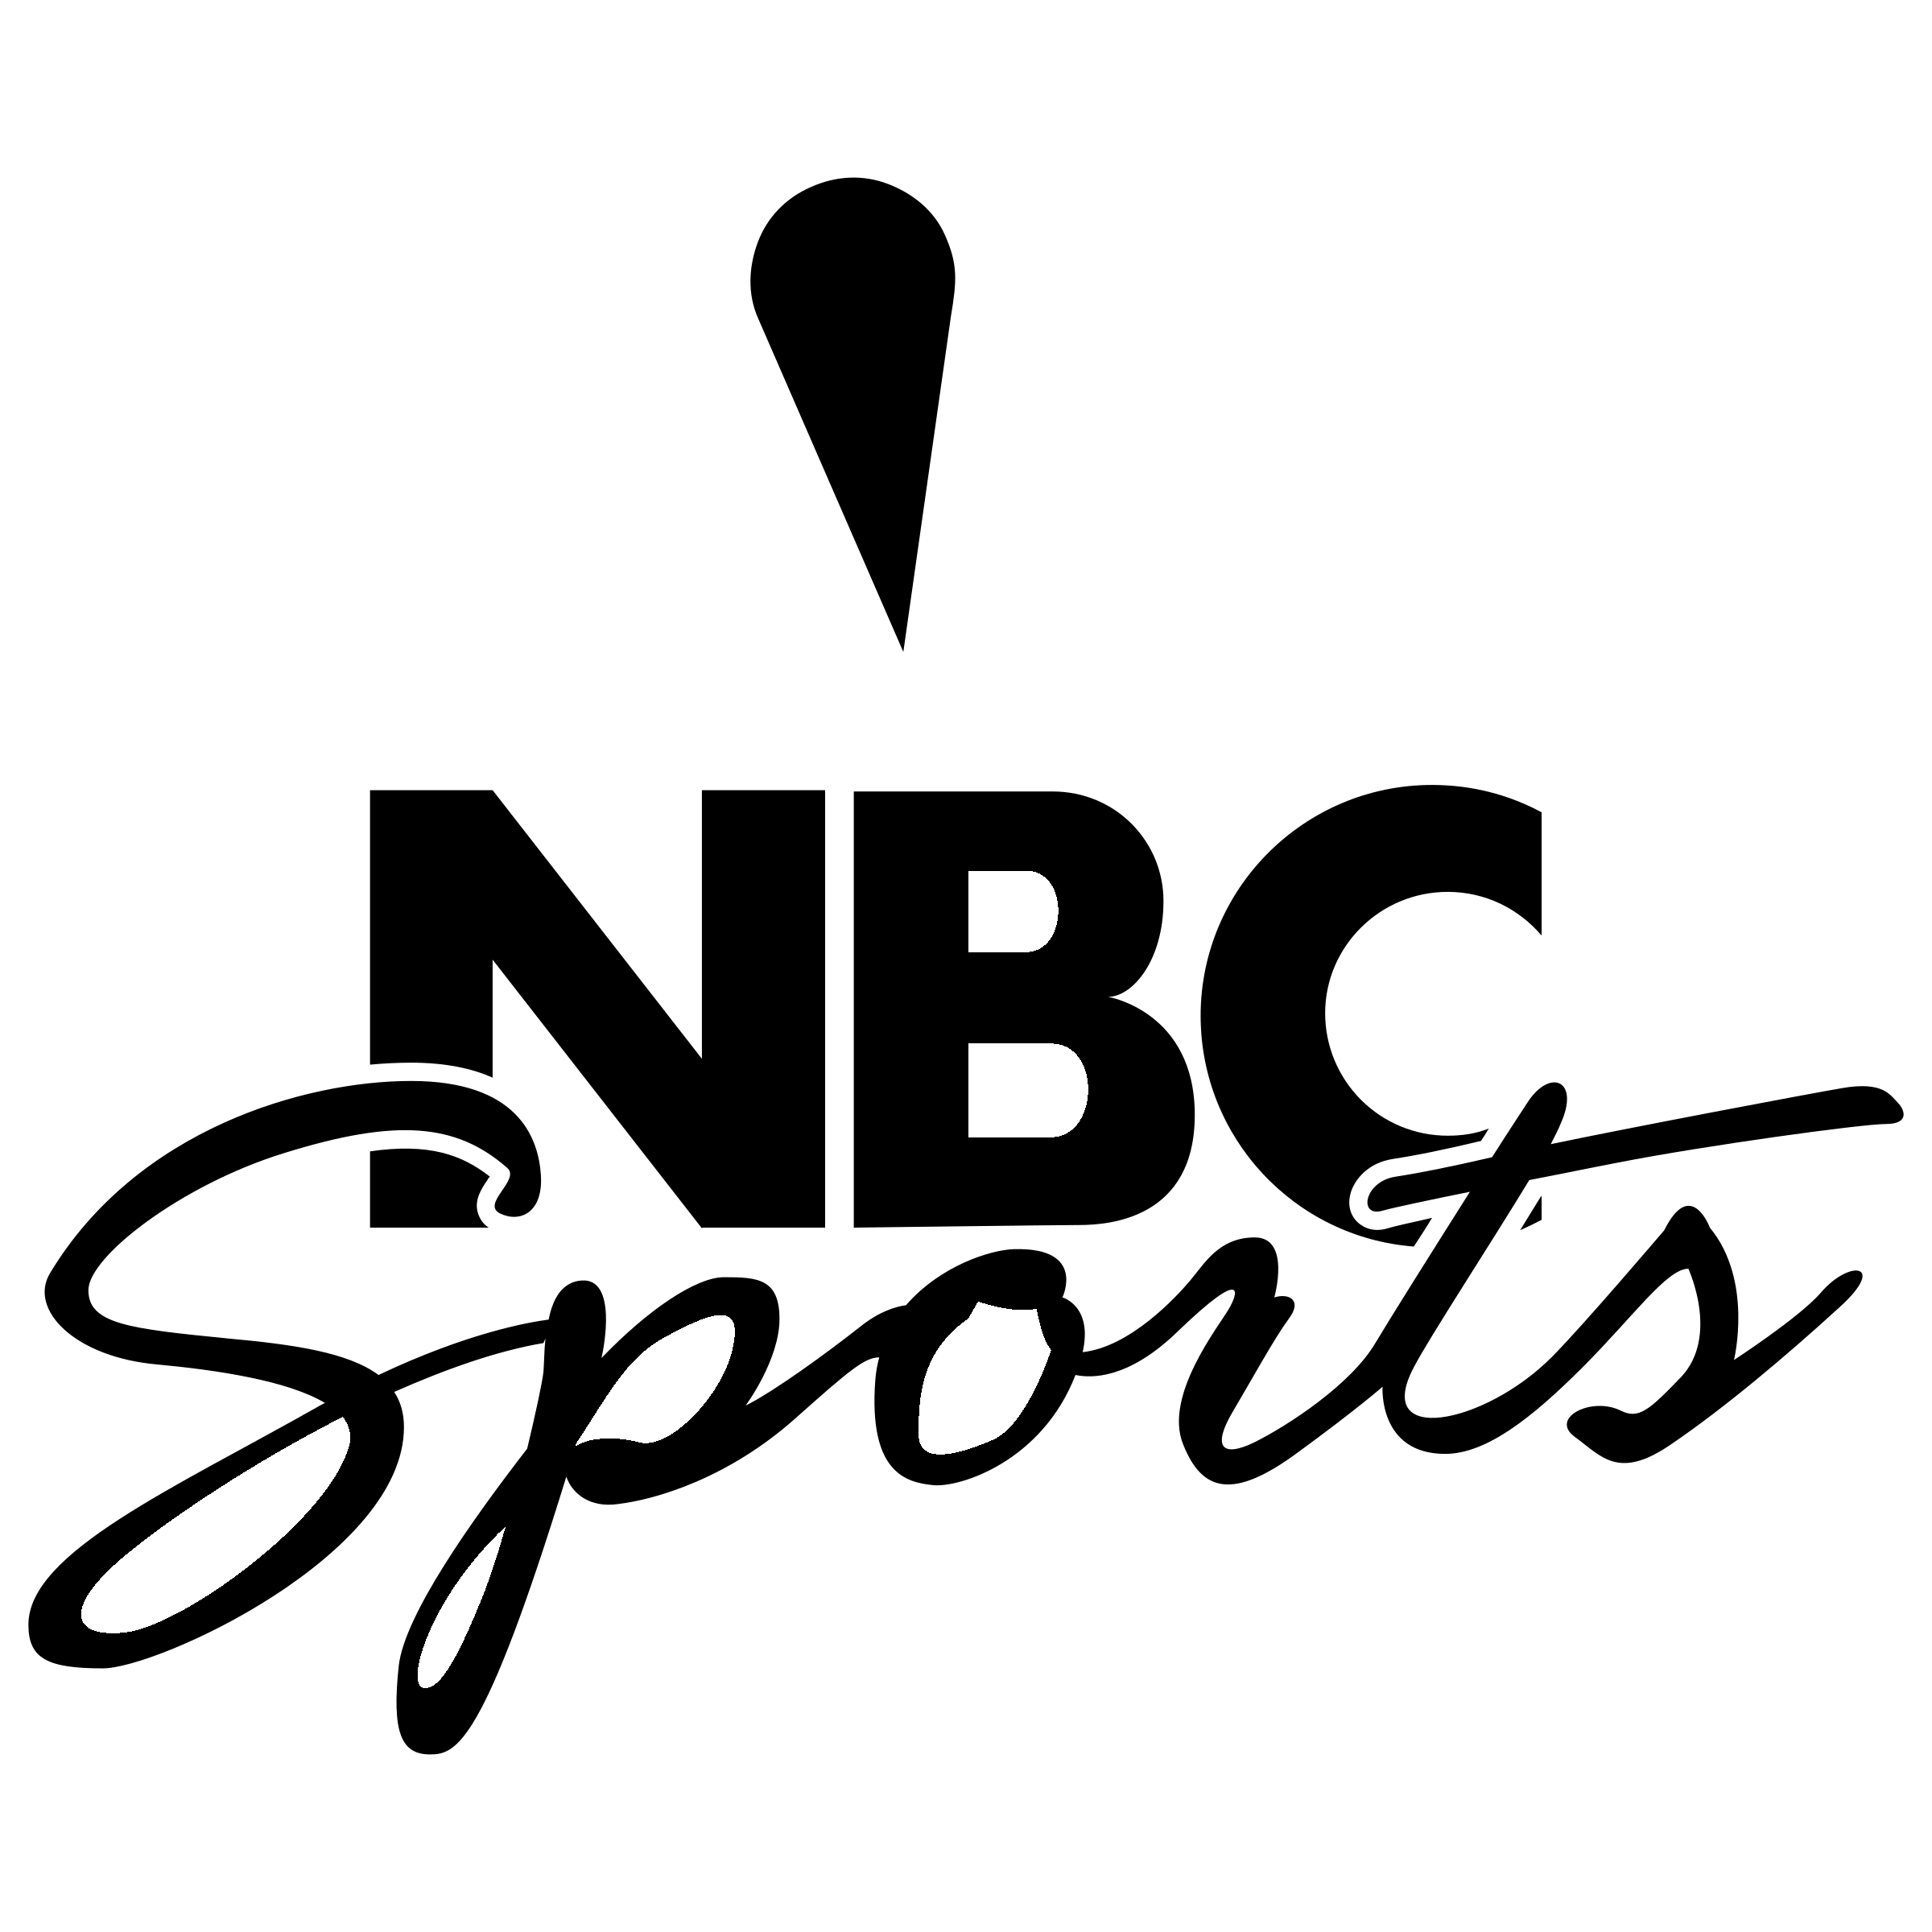 NBC Sports Logo - NBC Sports Logo PNG Transparent & SVG Vector - Freebie Supply